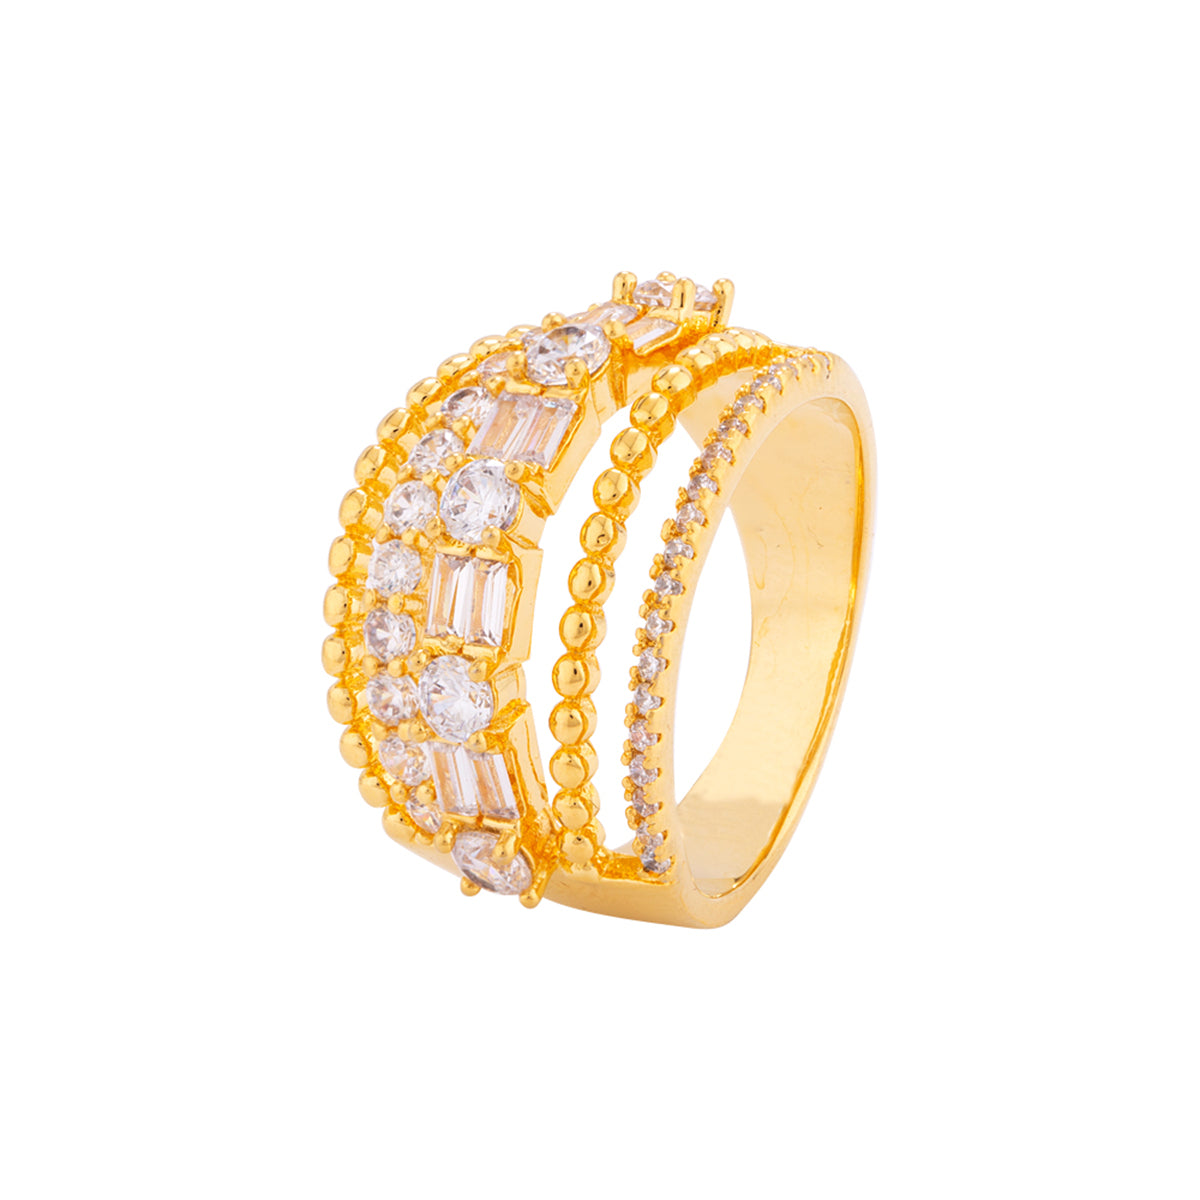 American Diamond Gems Adorned Women's Ring